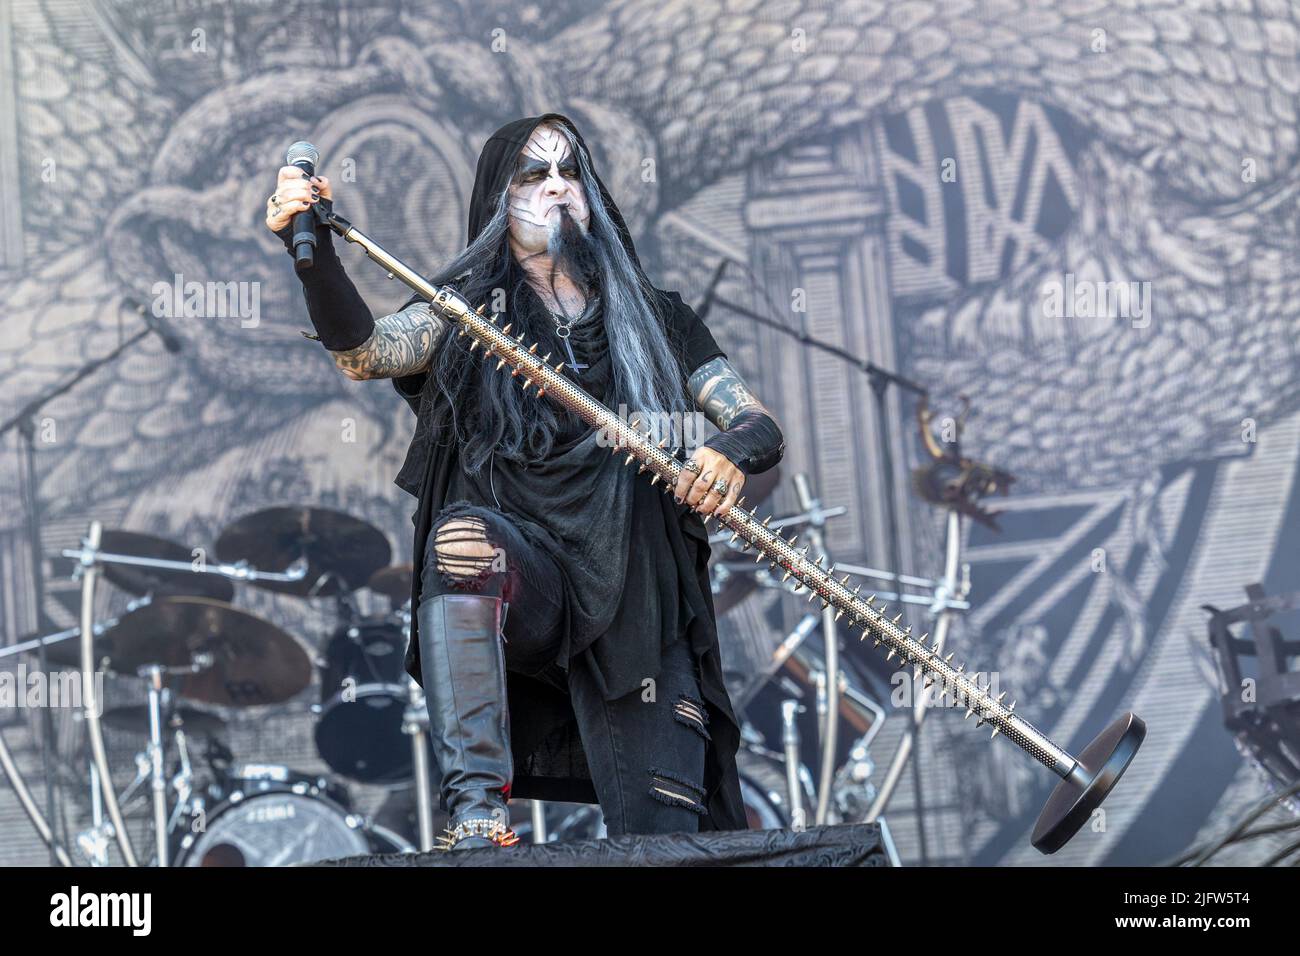 Dimmu Borgir's Shagrath On Upcoming Album, Fan Expectations, Black Metal  Scene & Touring (2017) - Metal Wani